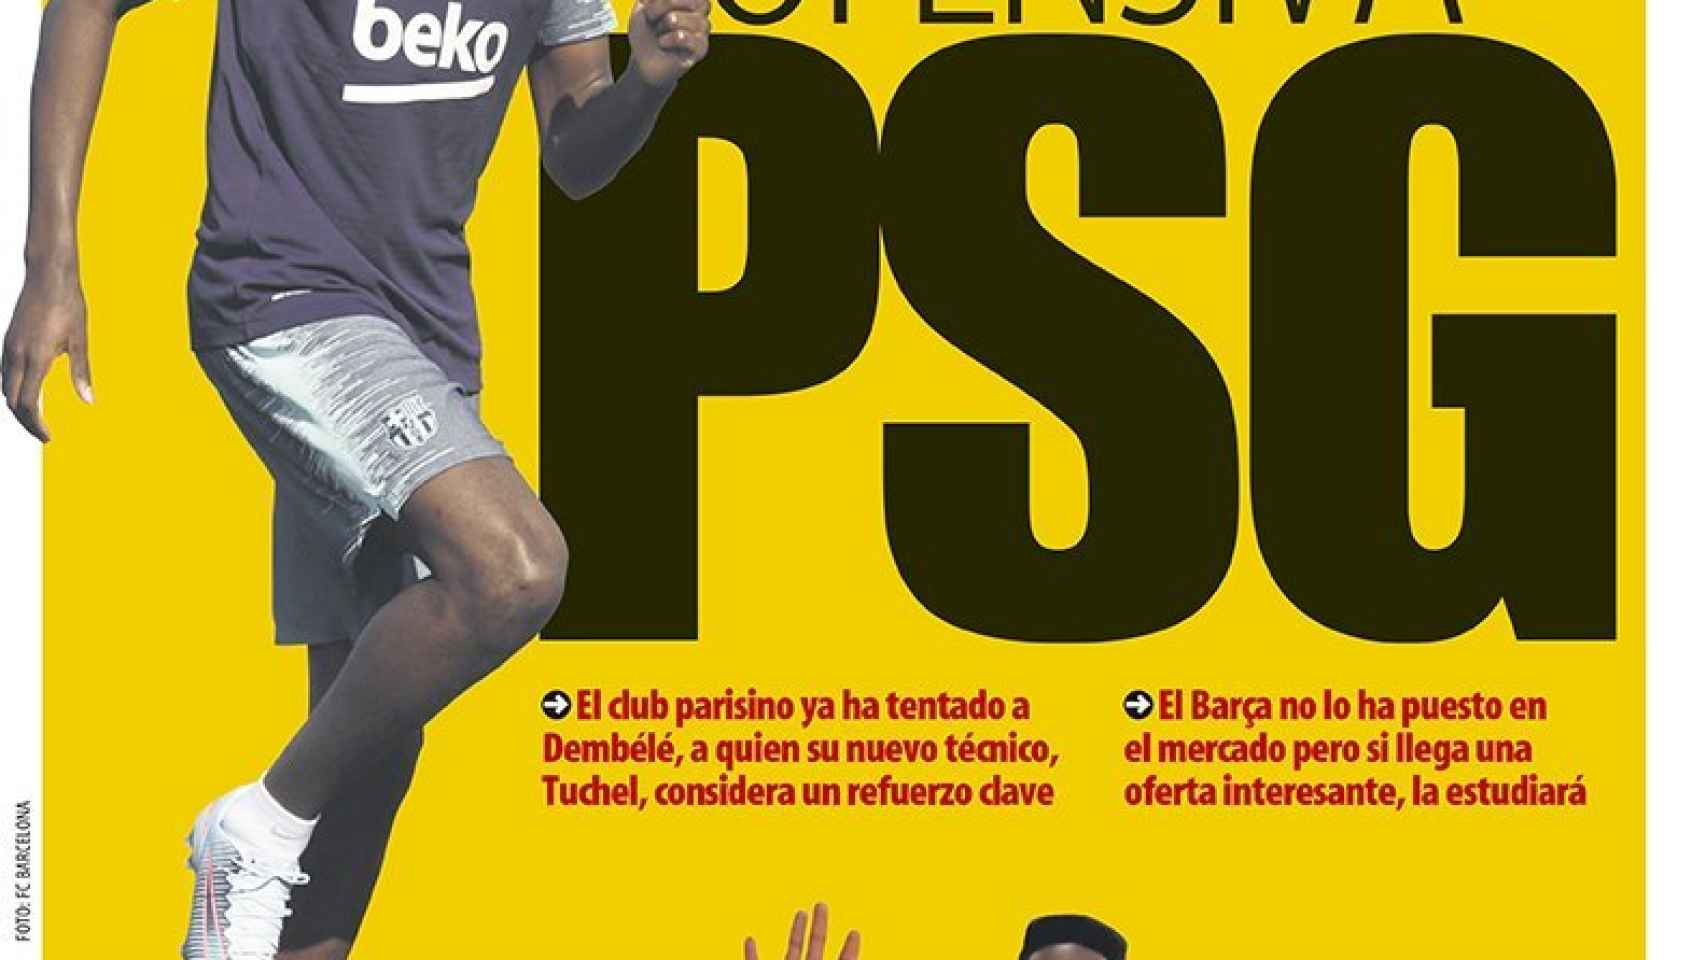 La portada del diario Mundo Deportivo (11/08/2018)1706 x 960